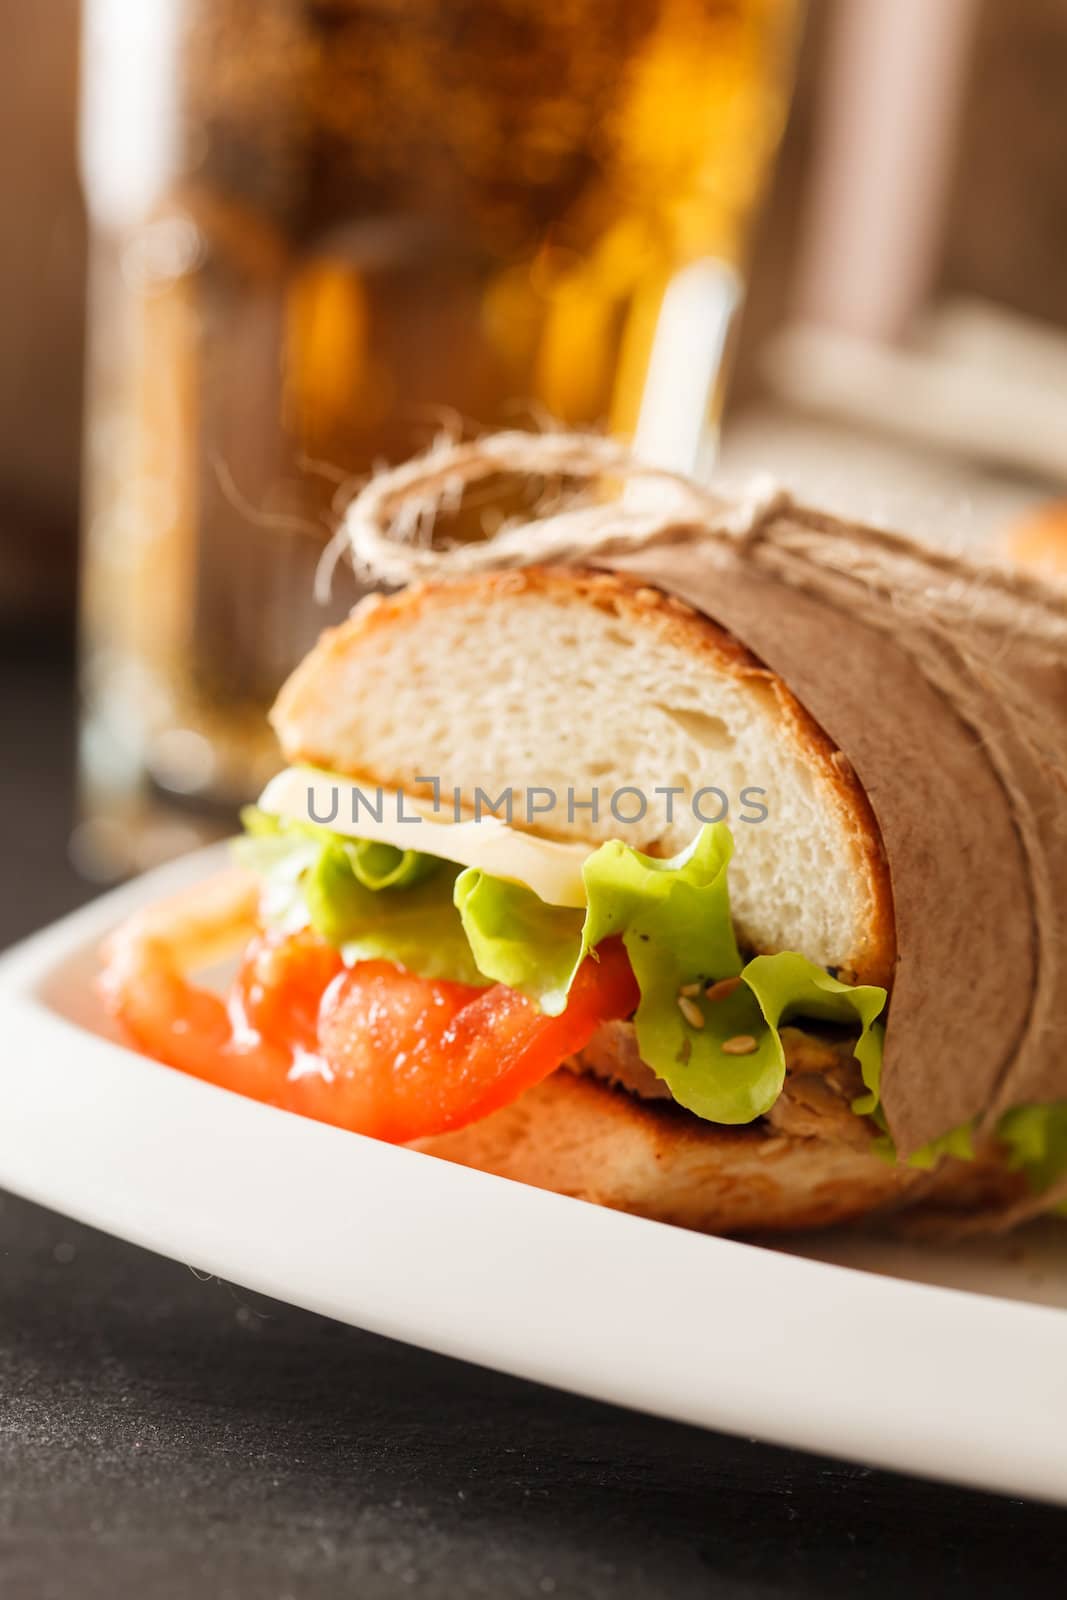 Fresh and tasty sandwich by shebeko